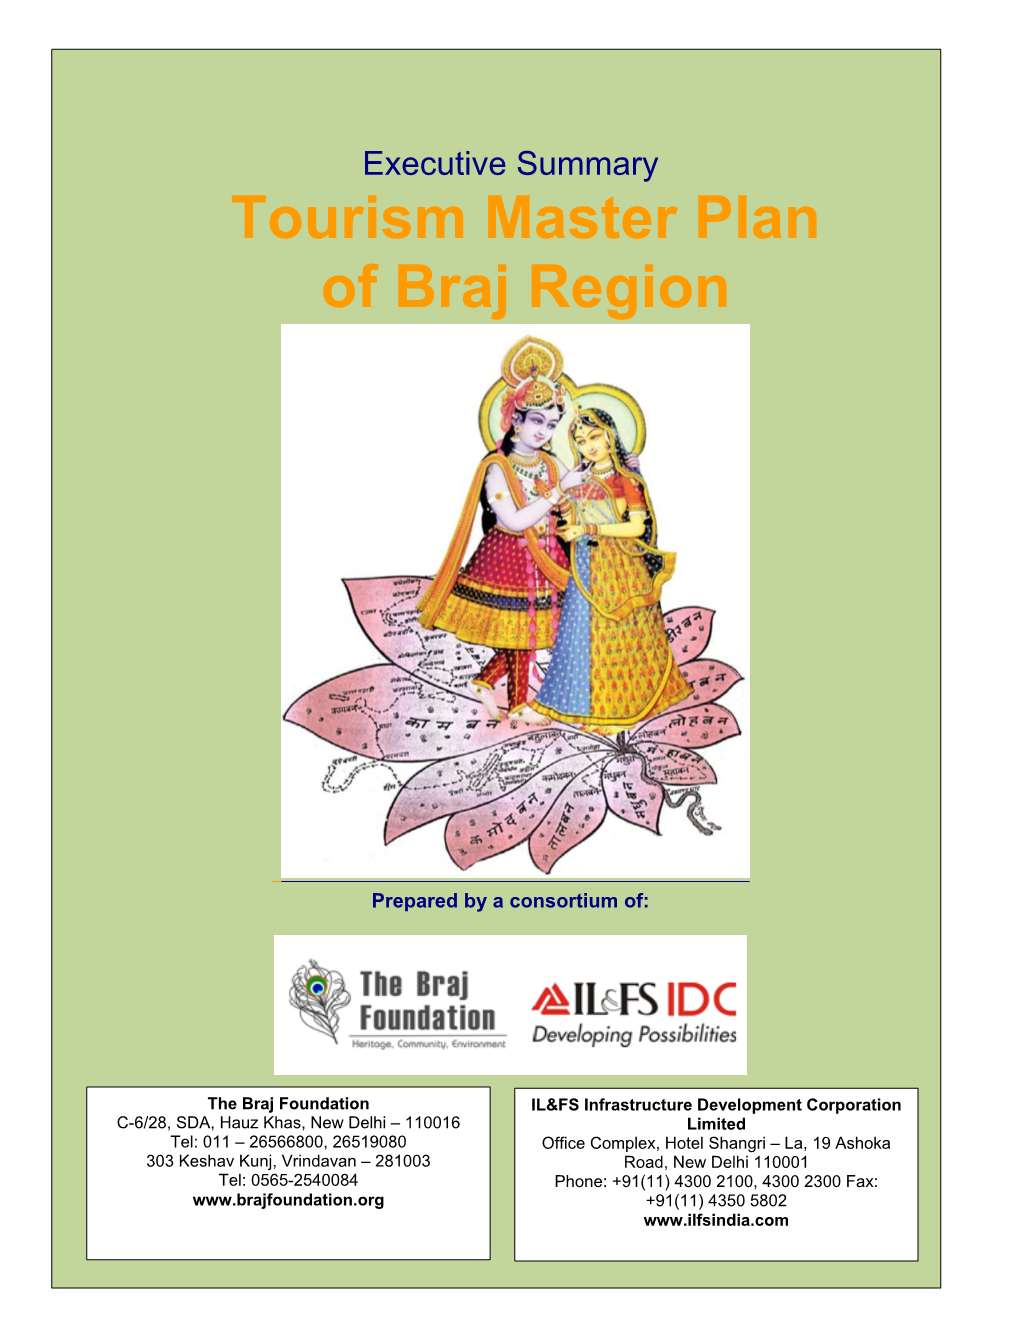 Tourism Master Plan of Braj Region, in a Competitive Bidding